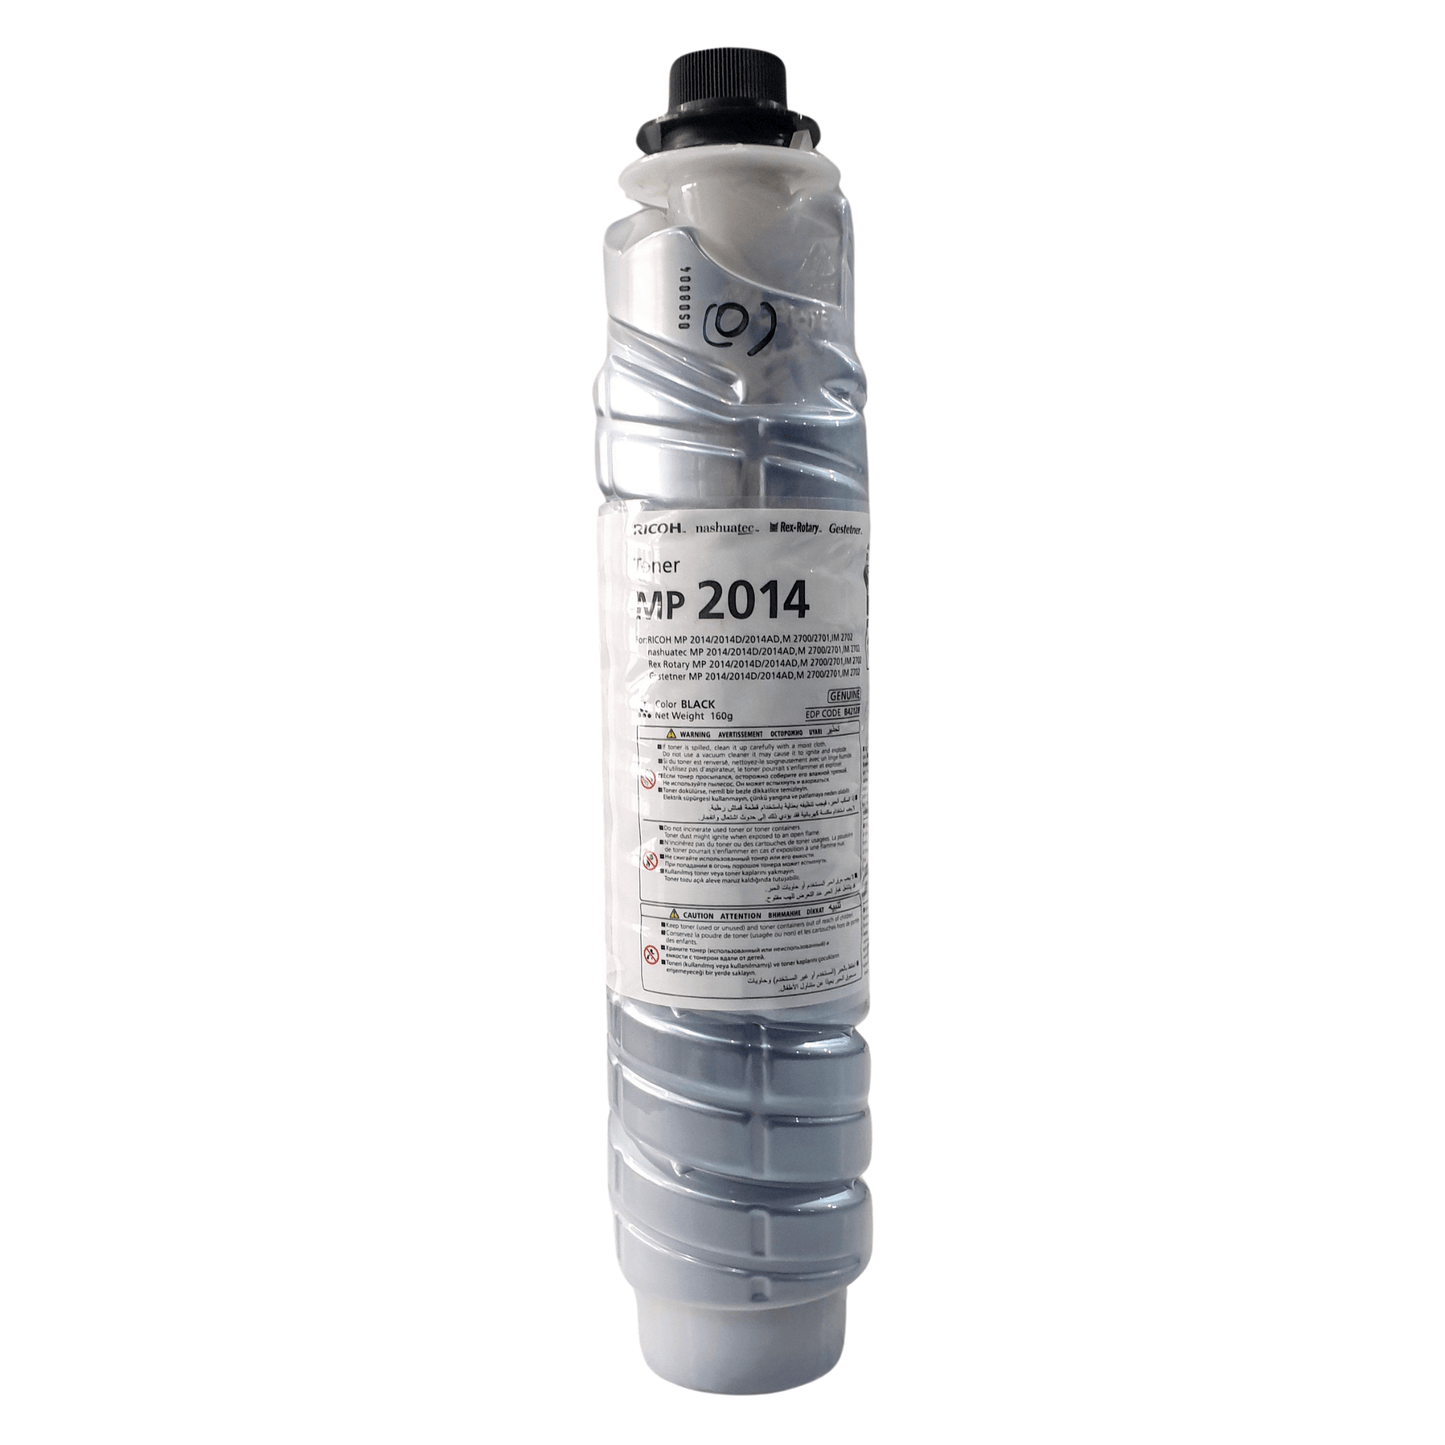 Toner Bottle Ricoh Aficio MP 2014L OEM 160 g - 𝐏𝐑𝐄𝐌𝐈𝐄𝐑 𝐓𝐑𝐀𝐃𝐄𝐑𝐒